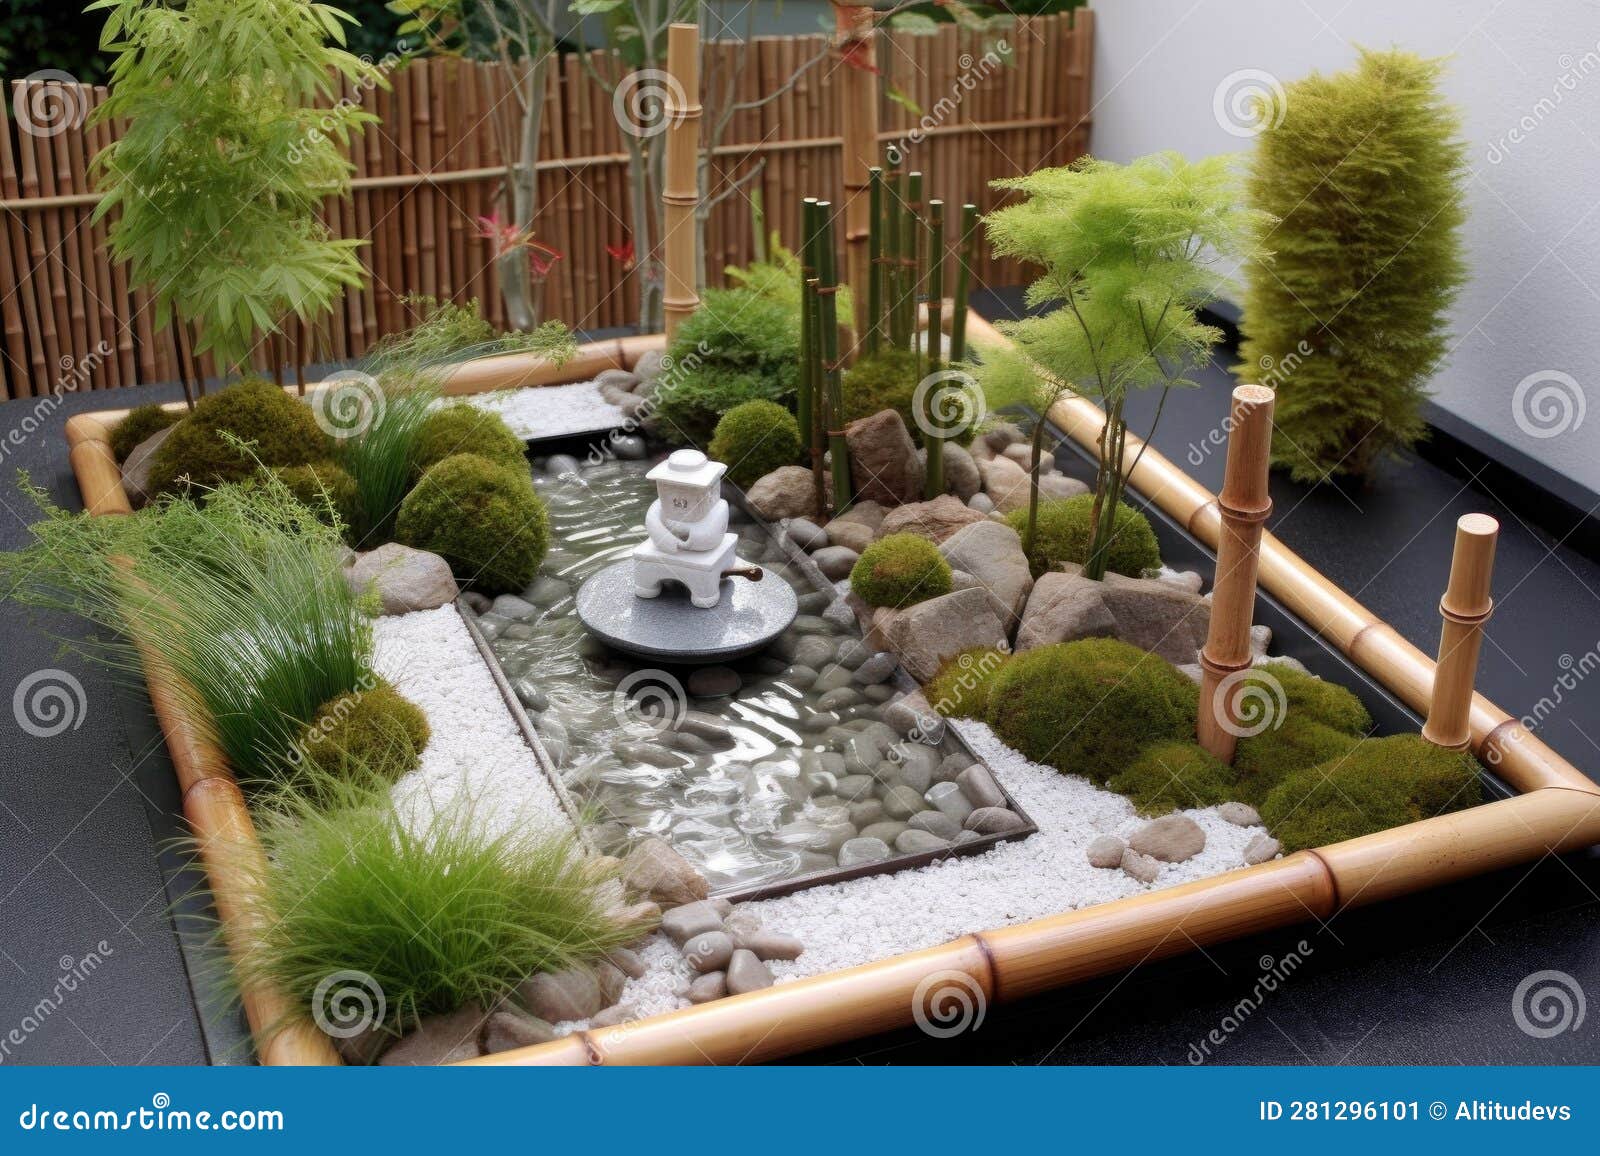 Zen Garden with Bamboo Water Fountain Feature Stock Illustration ...